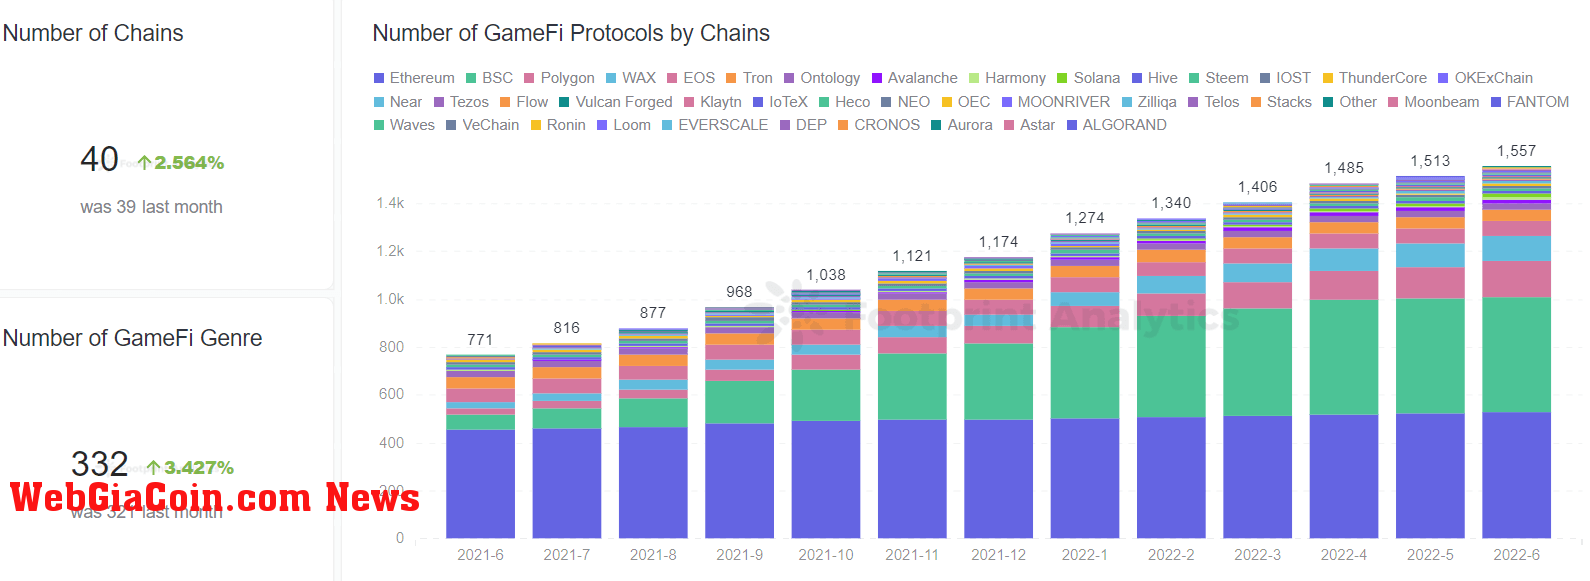 Footprint Analytics - GameFi Protocols/Chain/GameFi Genre